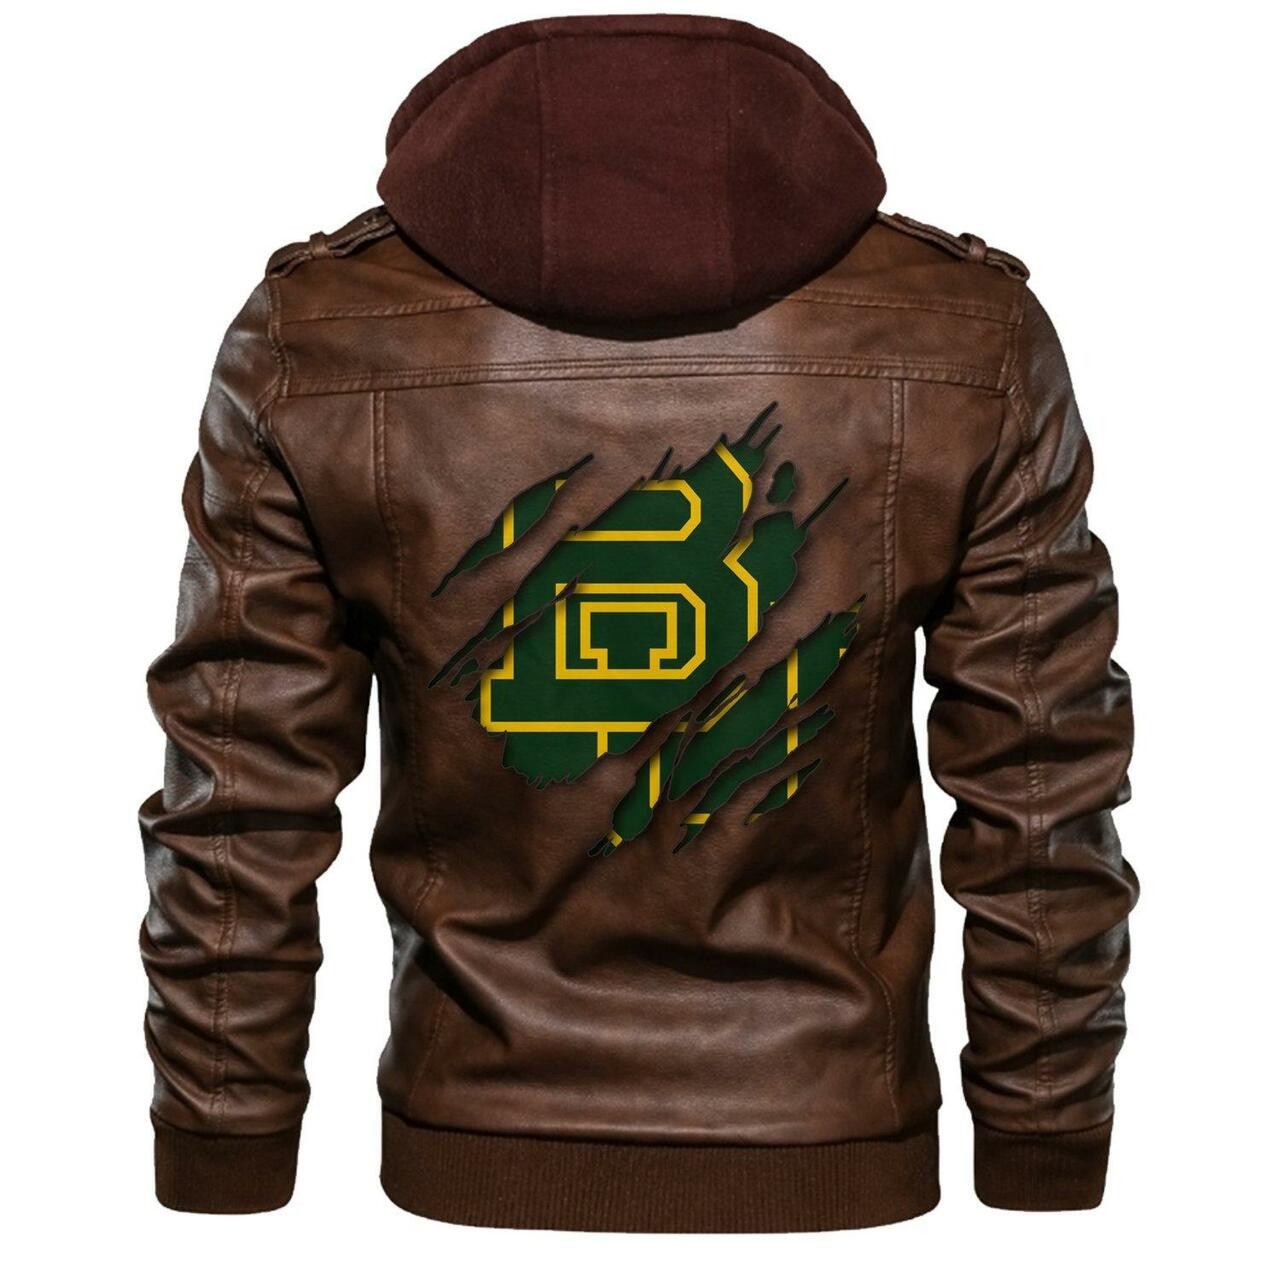 Top leather jacket Sells Best on Techcomshop 81